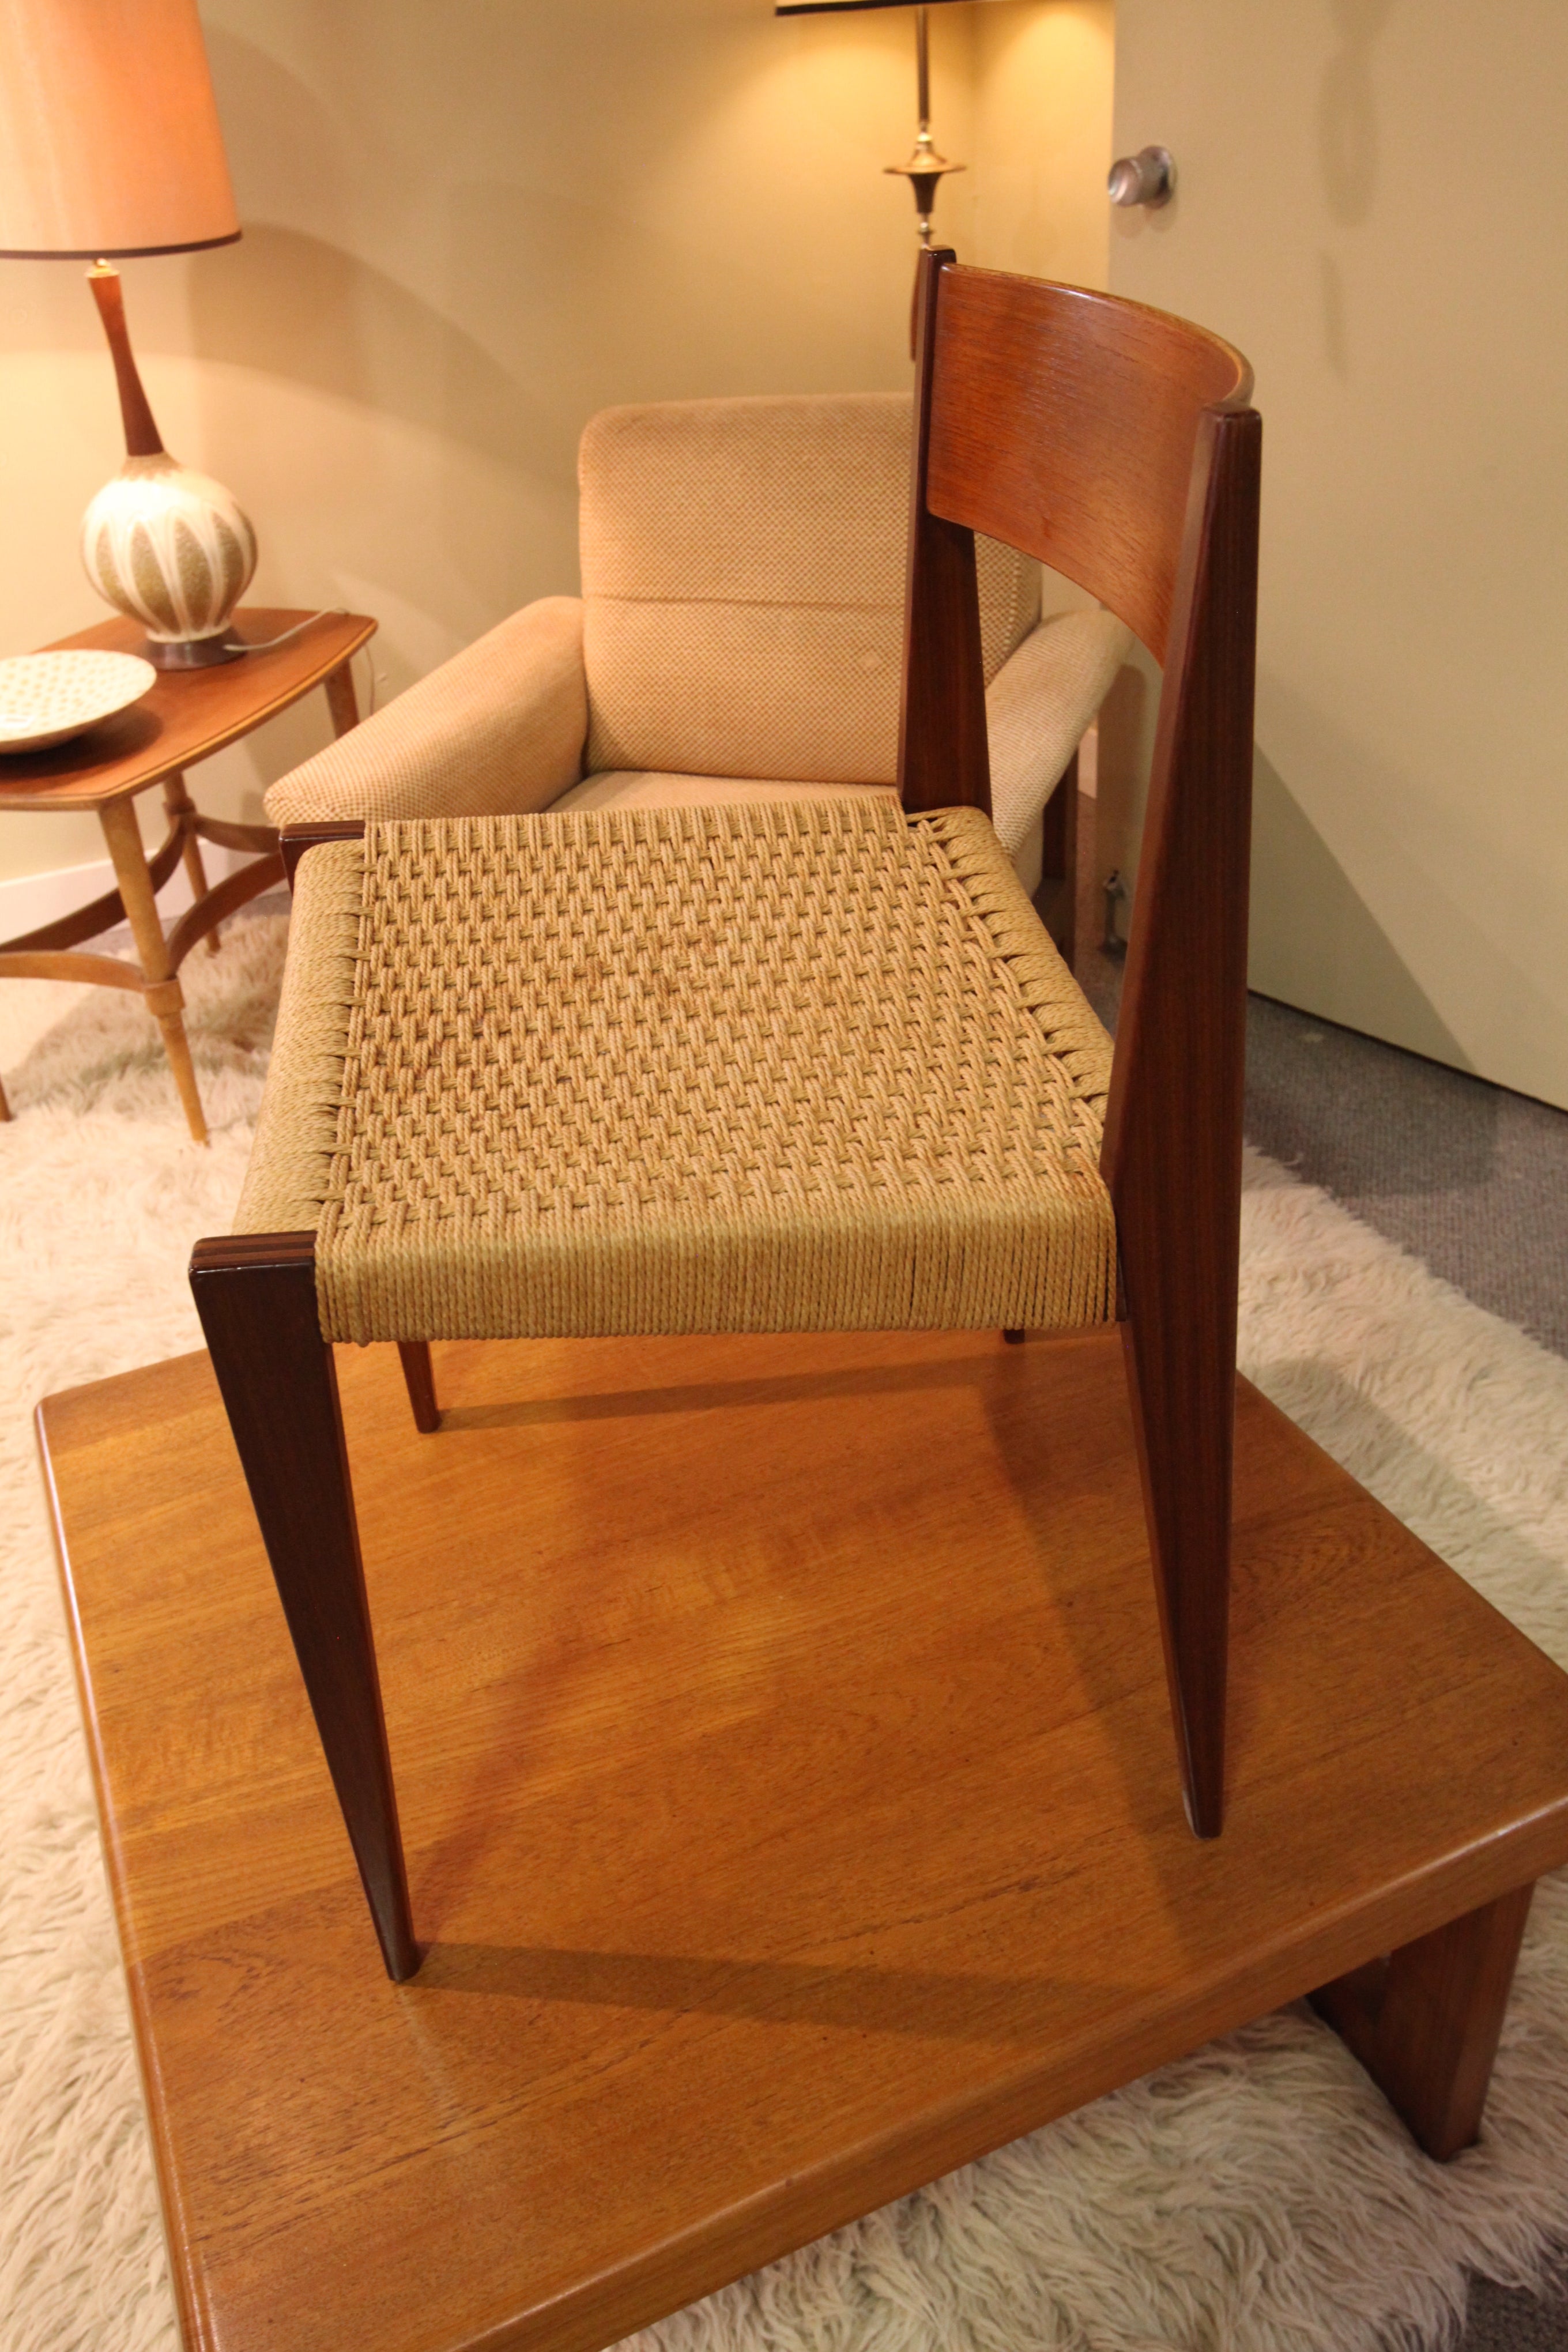 Single Vintage Danish Chair